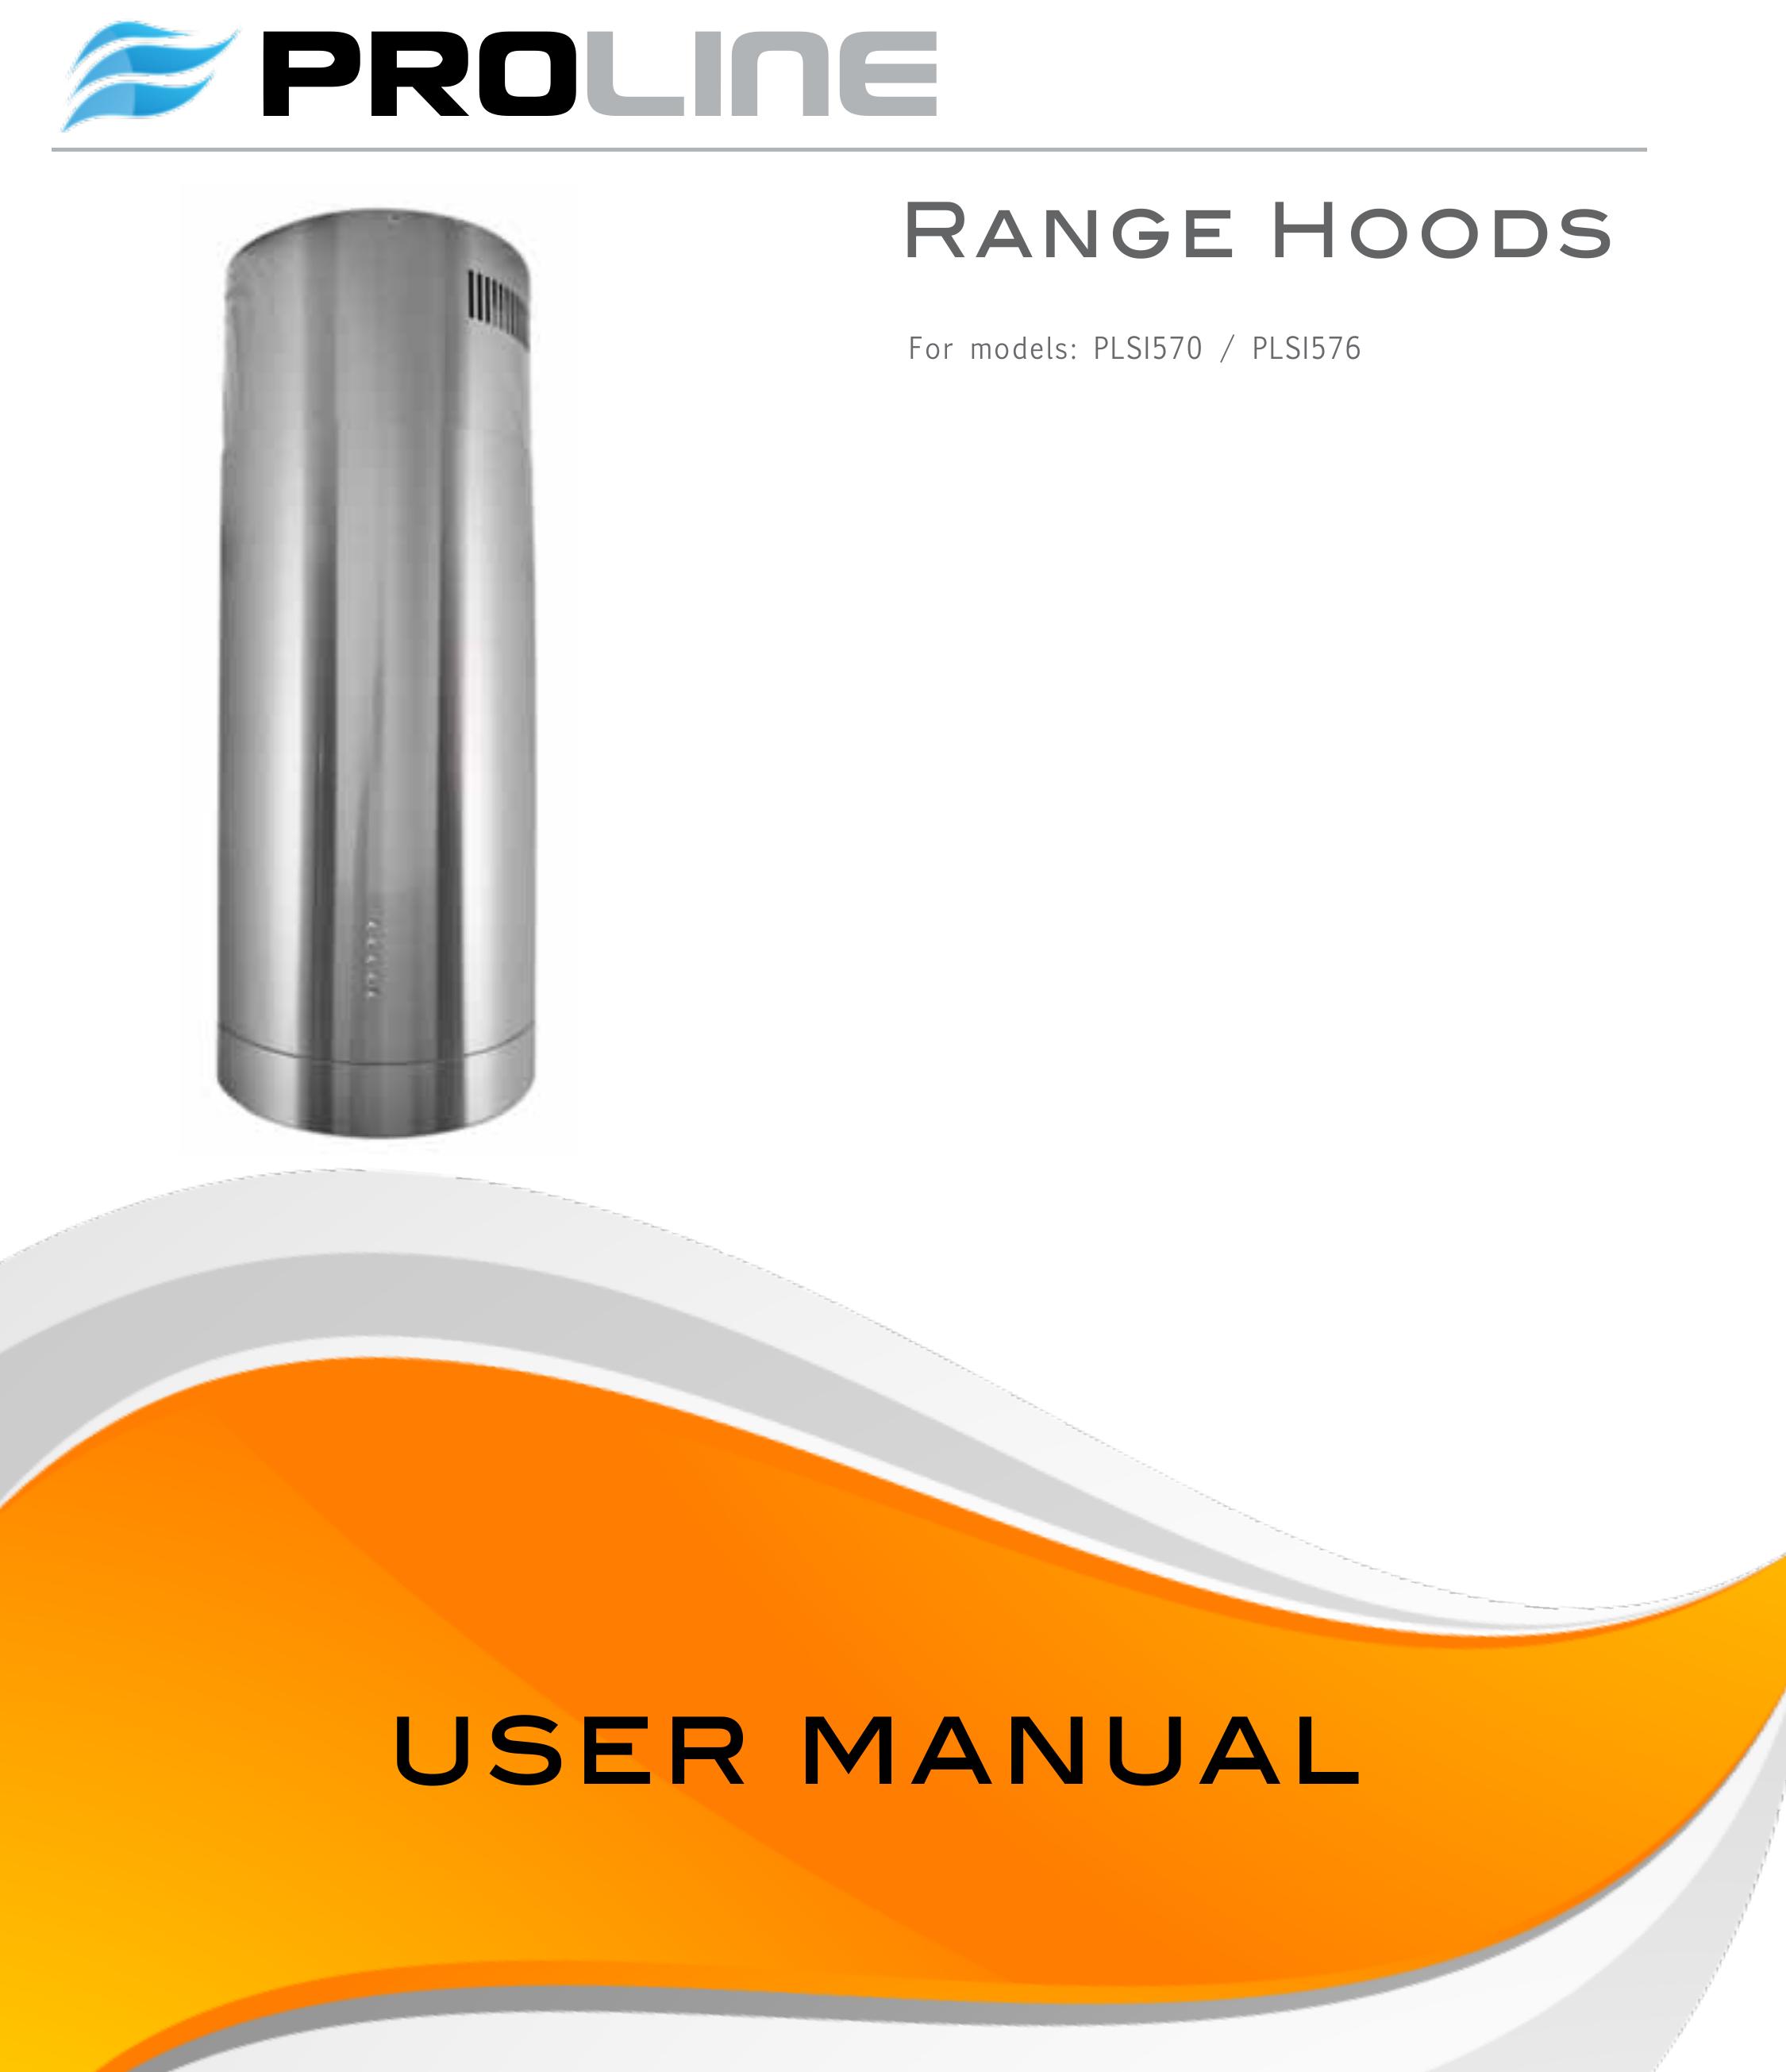 Proline PLS1570 Ventilation Hood User Manual